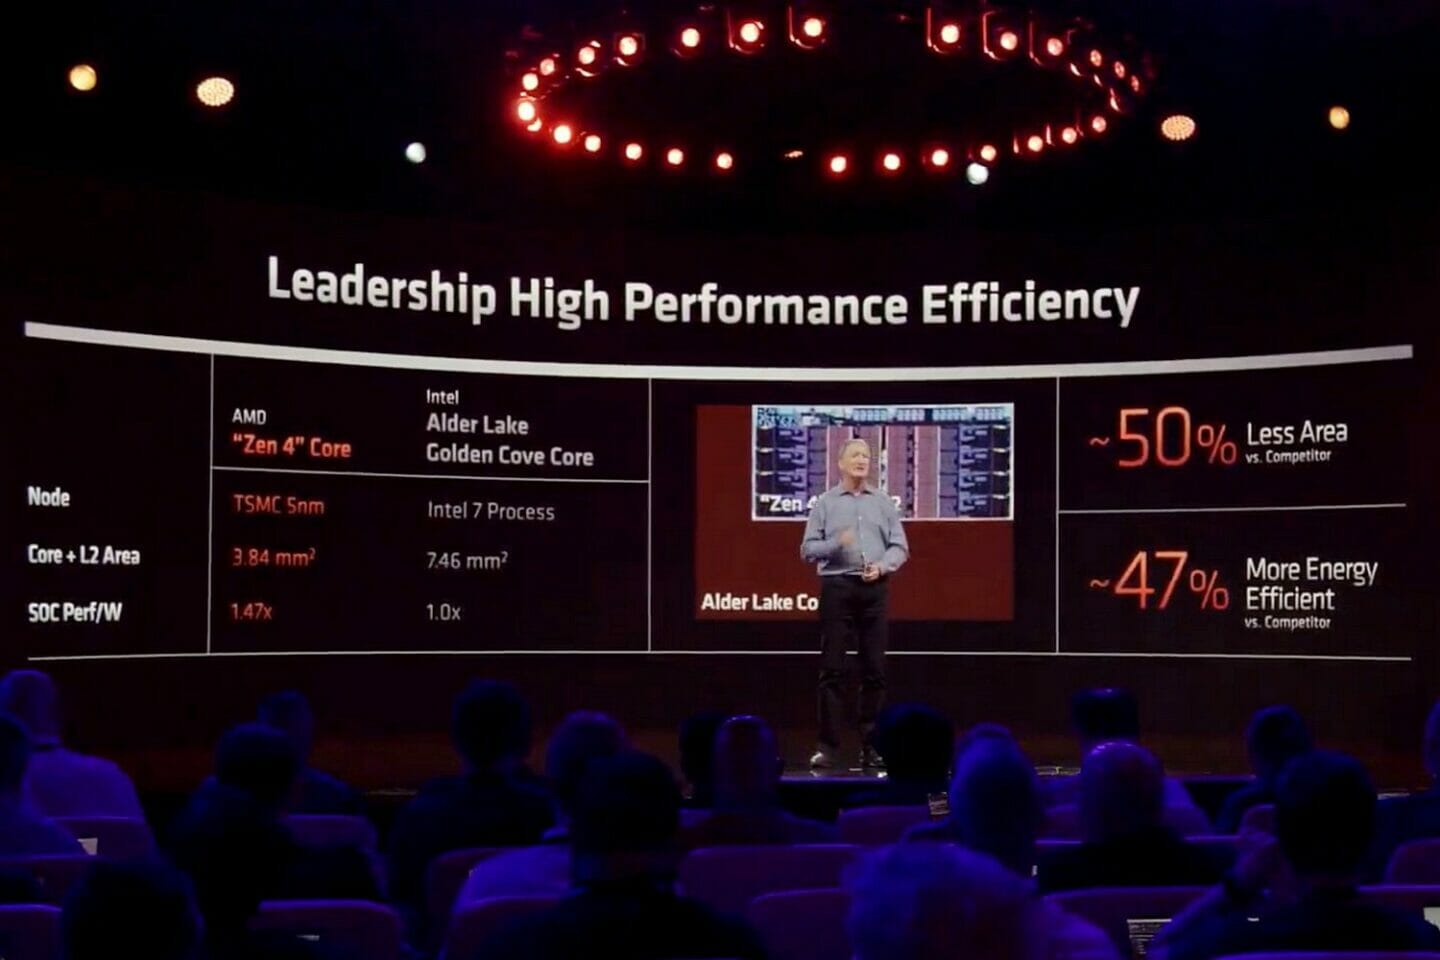 AMD introduced Ryzen 7000 processors and the Socket AM5 platform